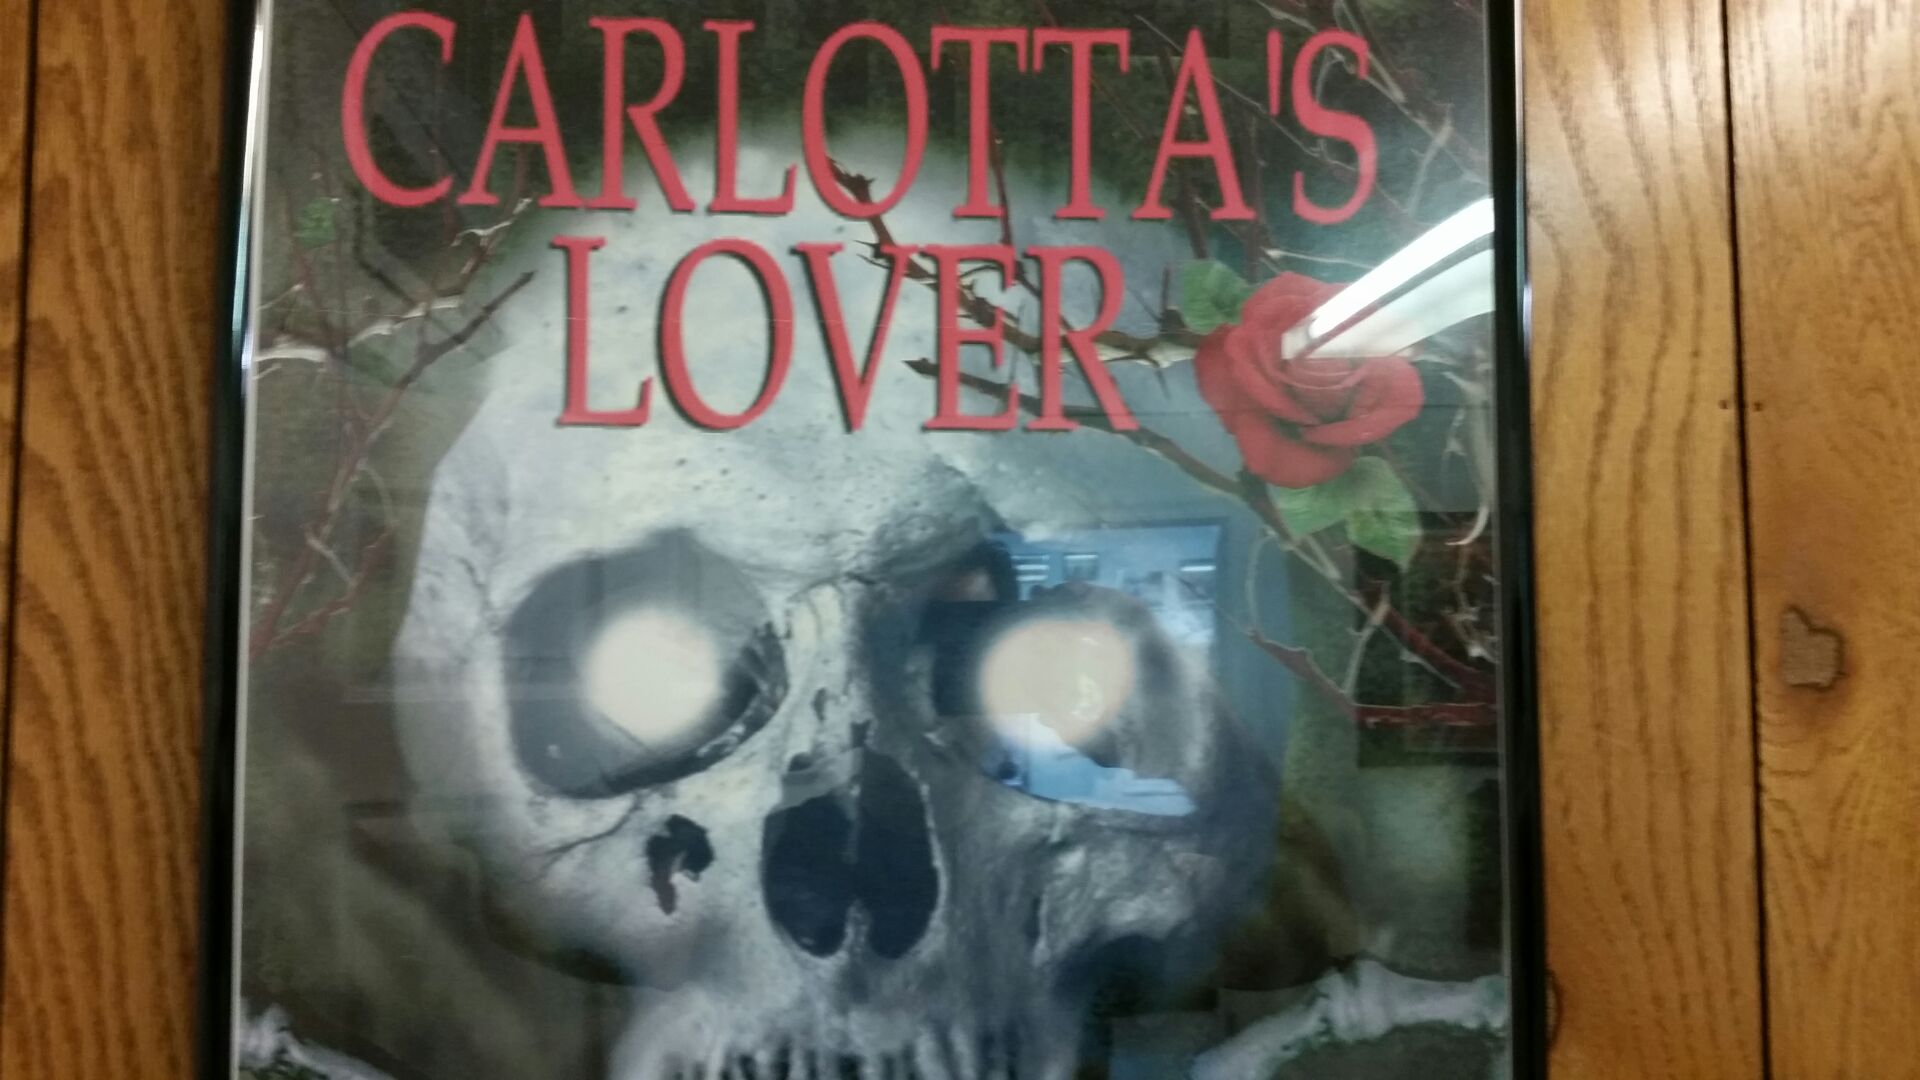 Art from CARLOTTA'S LOVER in development